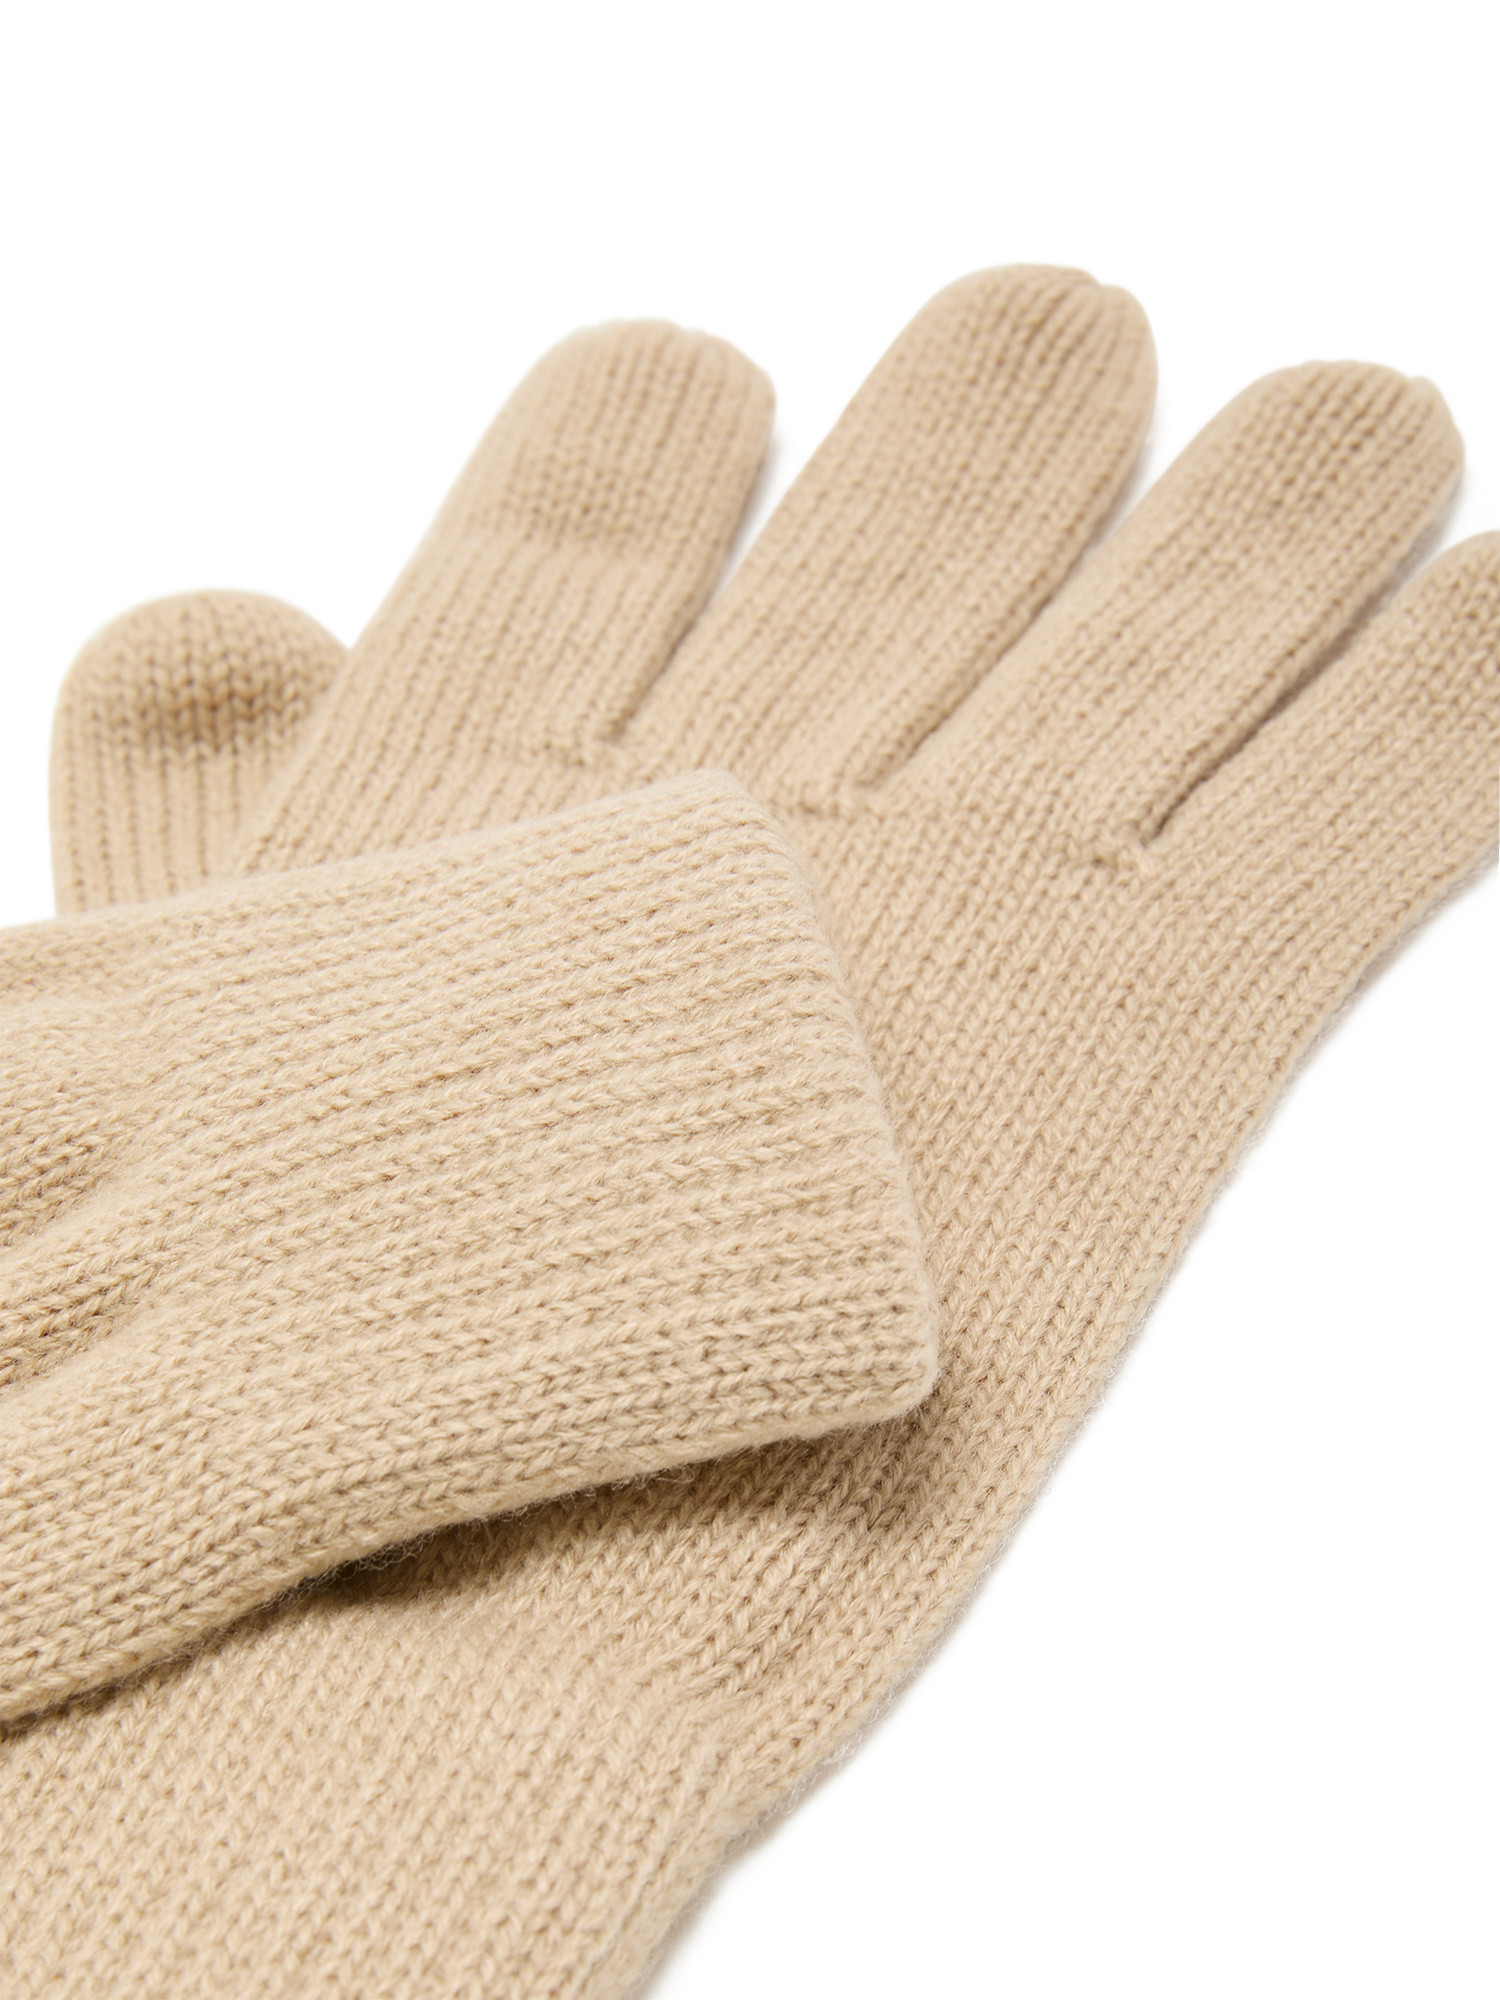 Luca D'Altieri - Basic knitted gloves, Beige, large image number 1